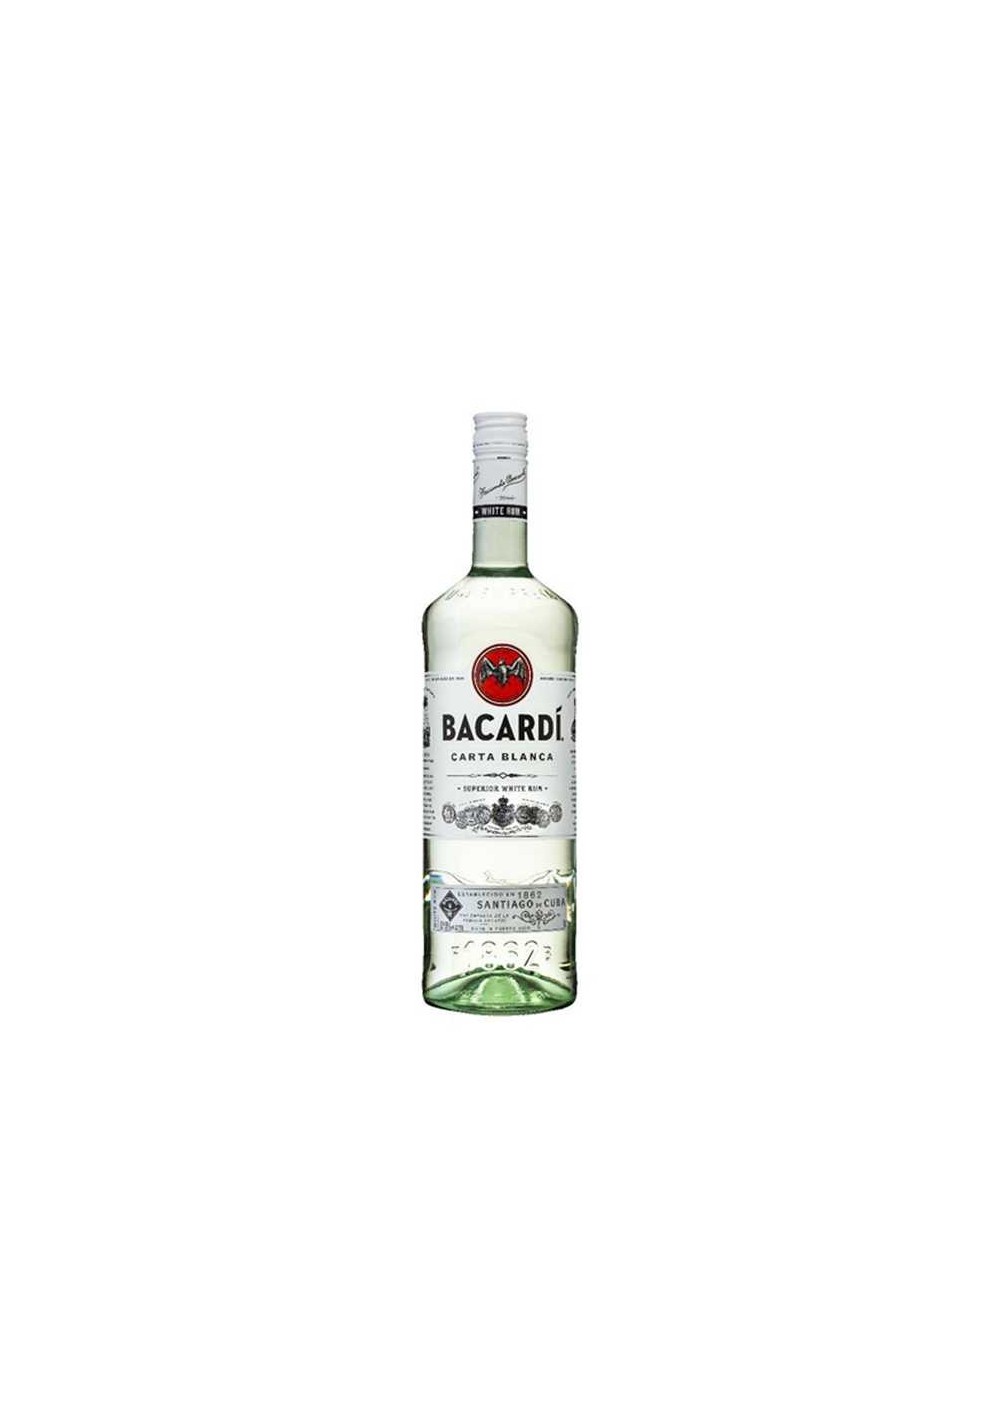 Bacardi - Carta Blanca - (1 litre)